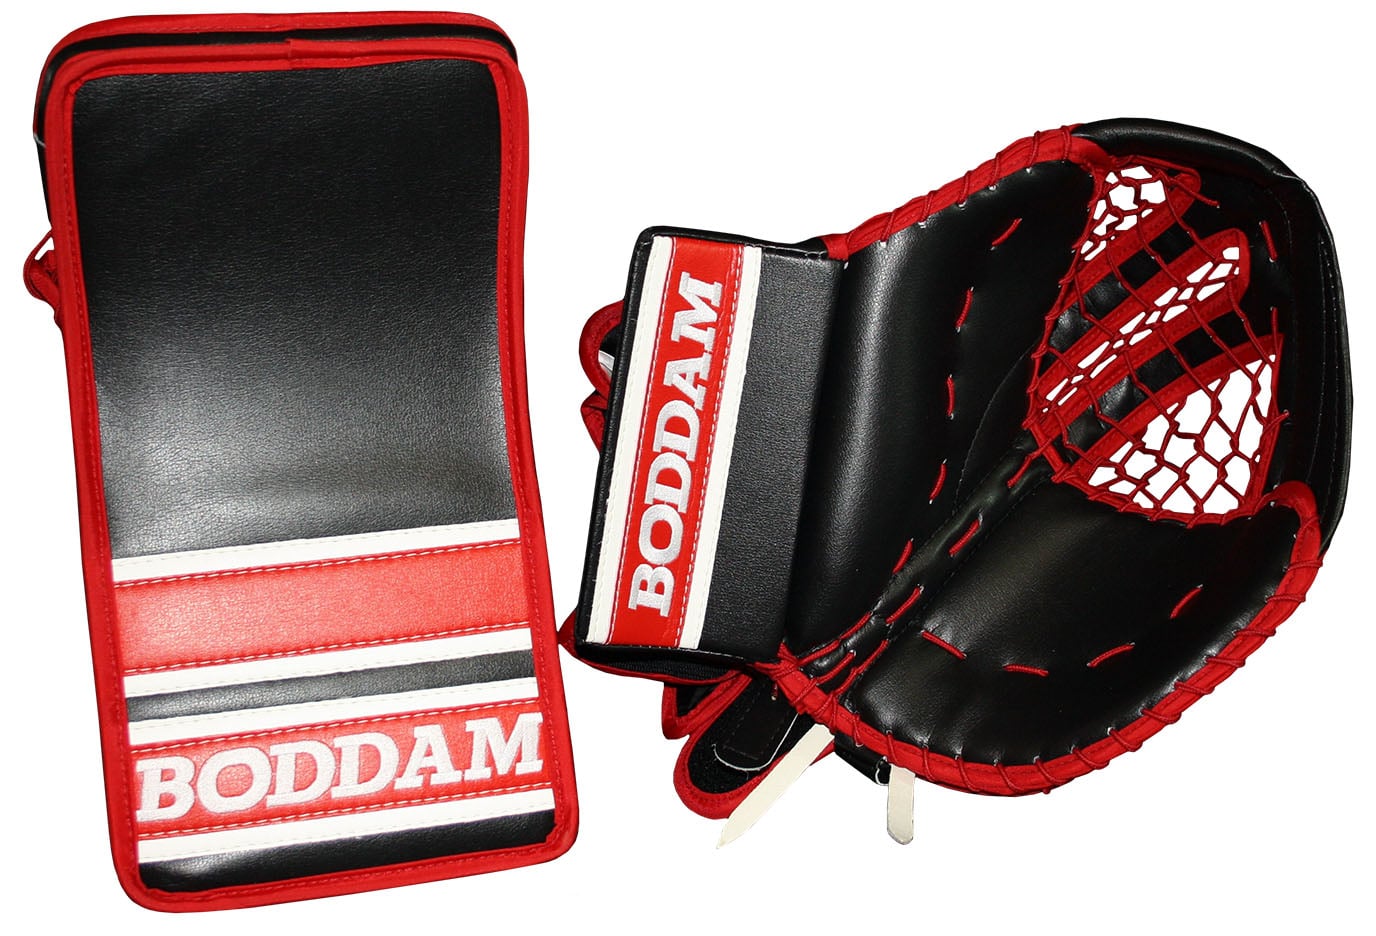 Boddam custom hockey glove and blocker